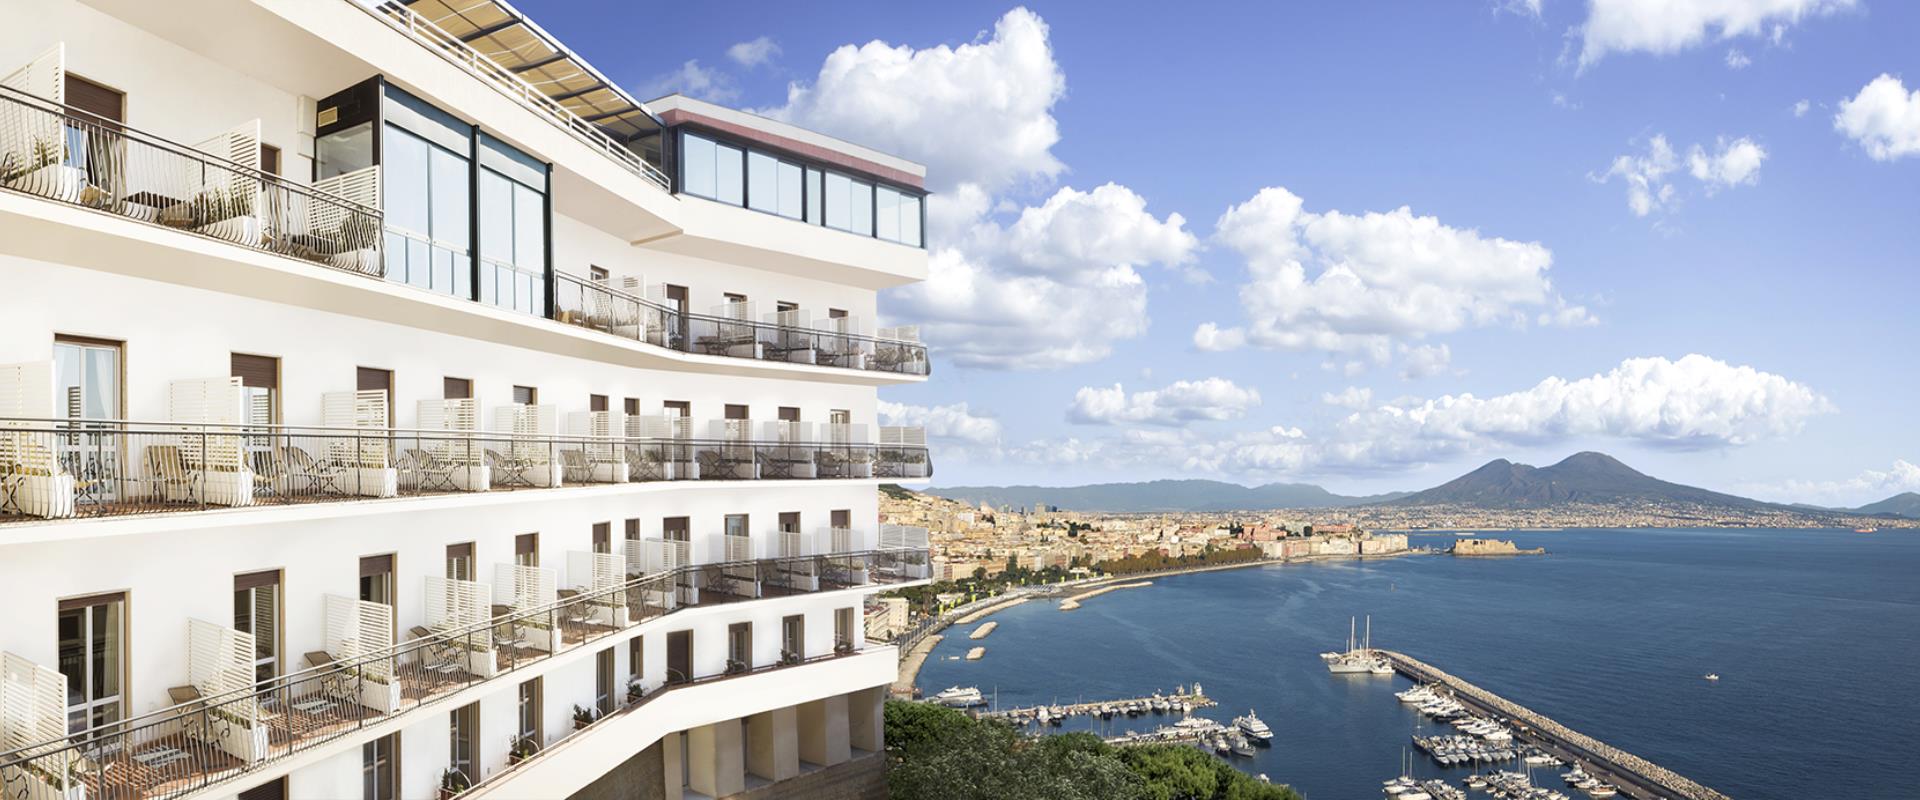 BW Signature Collection Hotel Paradiso Nápoles-hotel 4 estrelas em Posillipo com incríveis vistas sobre a Baía de Nápoles